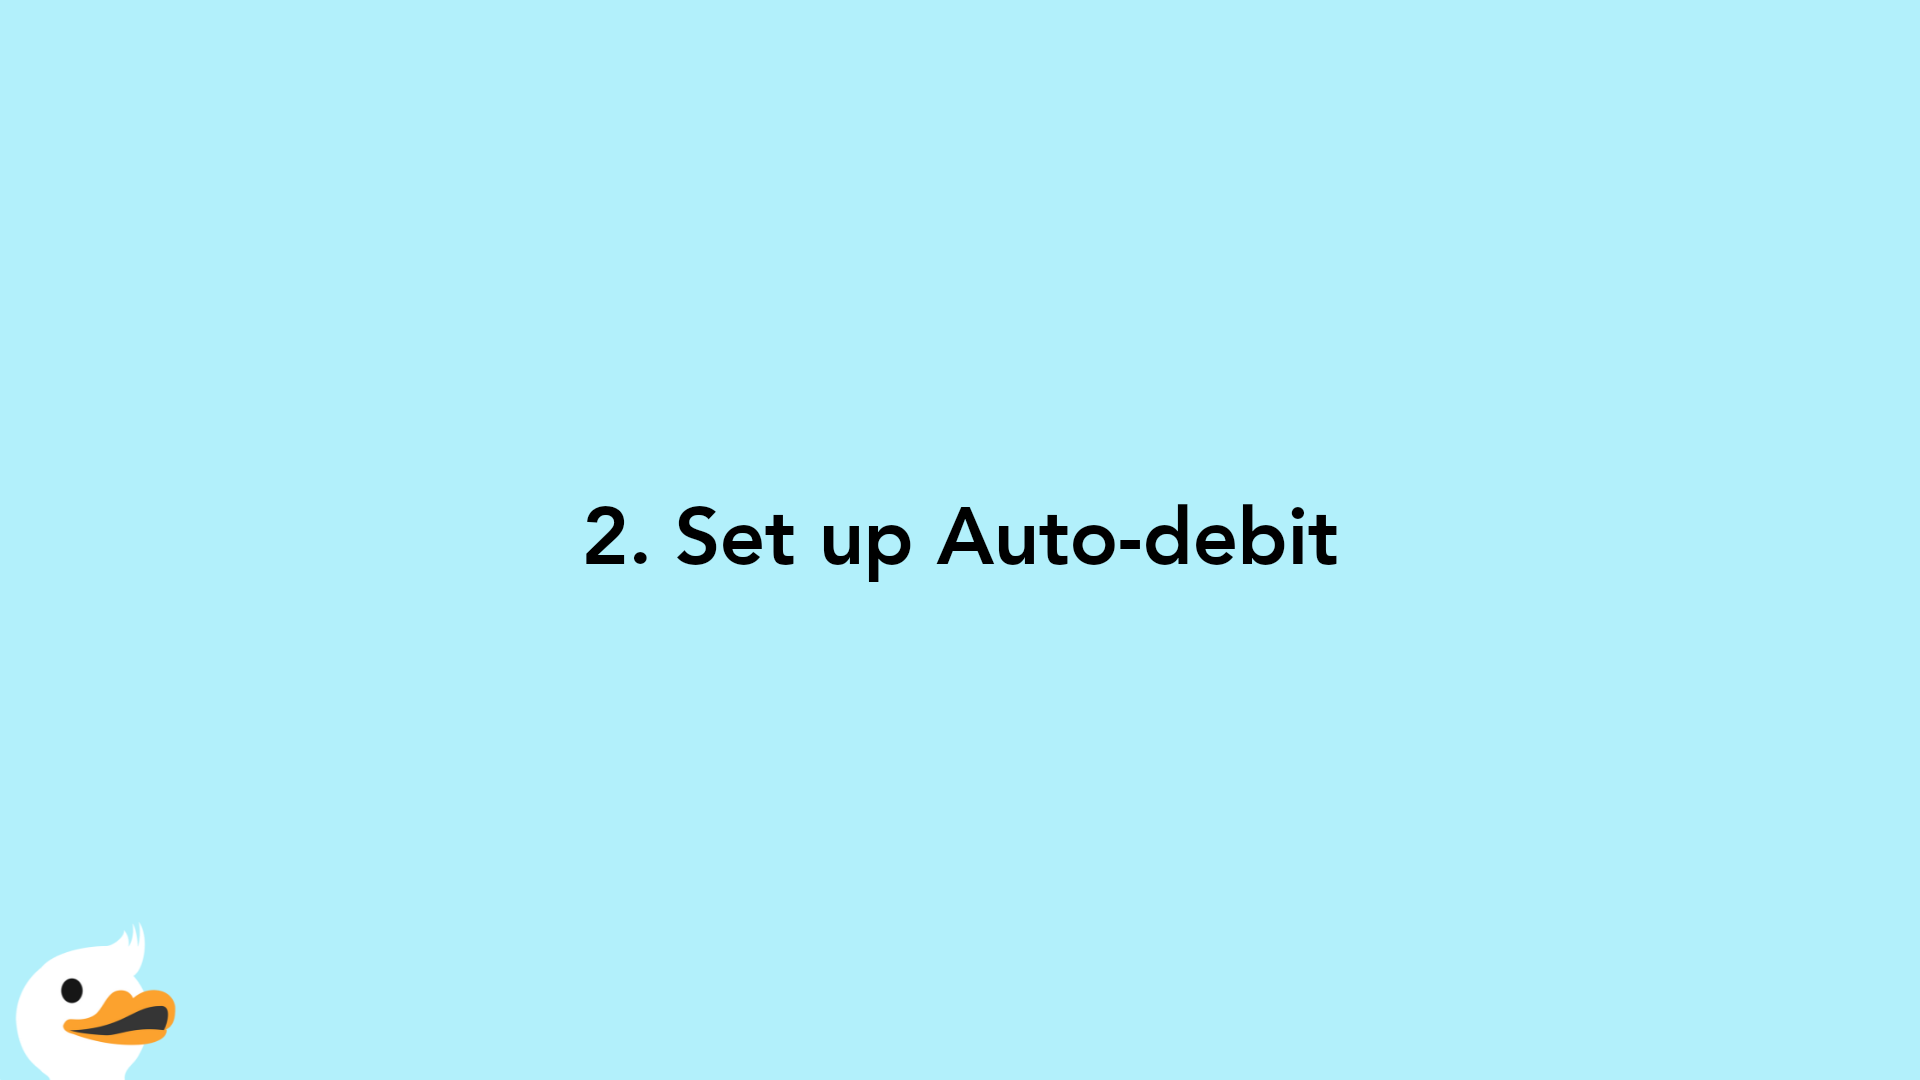 2. Set up Auto-debit